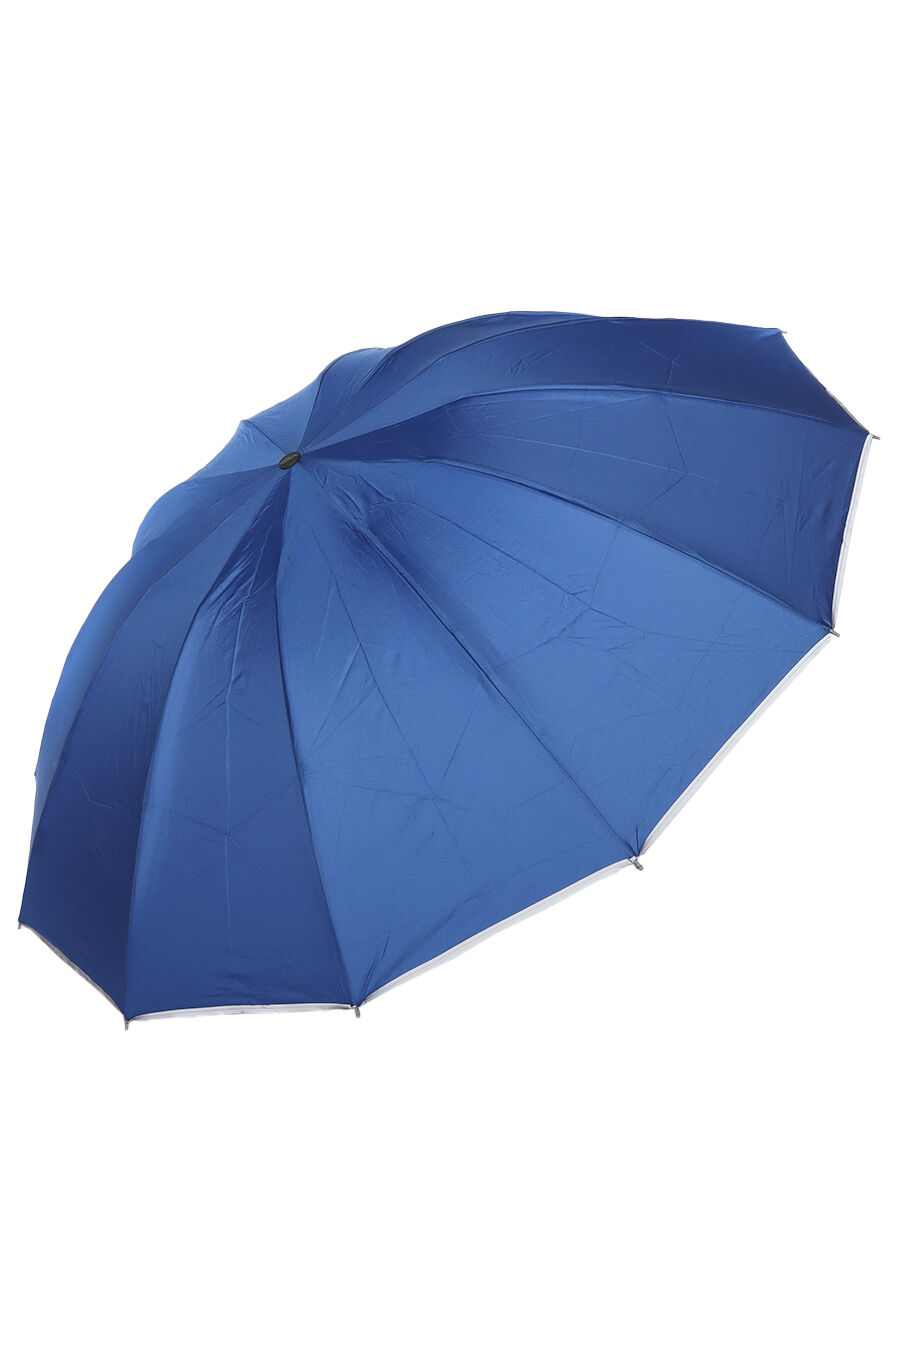 Зонт муж. Umbrella 6510-4 полный автомат (синий)